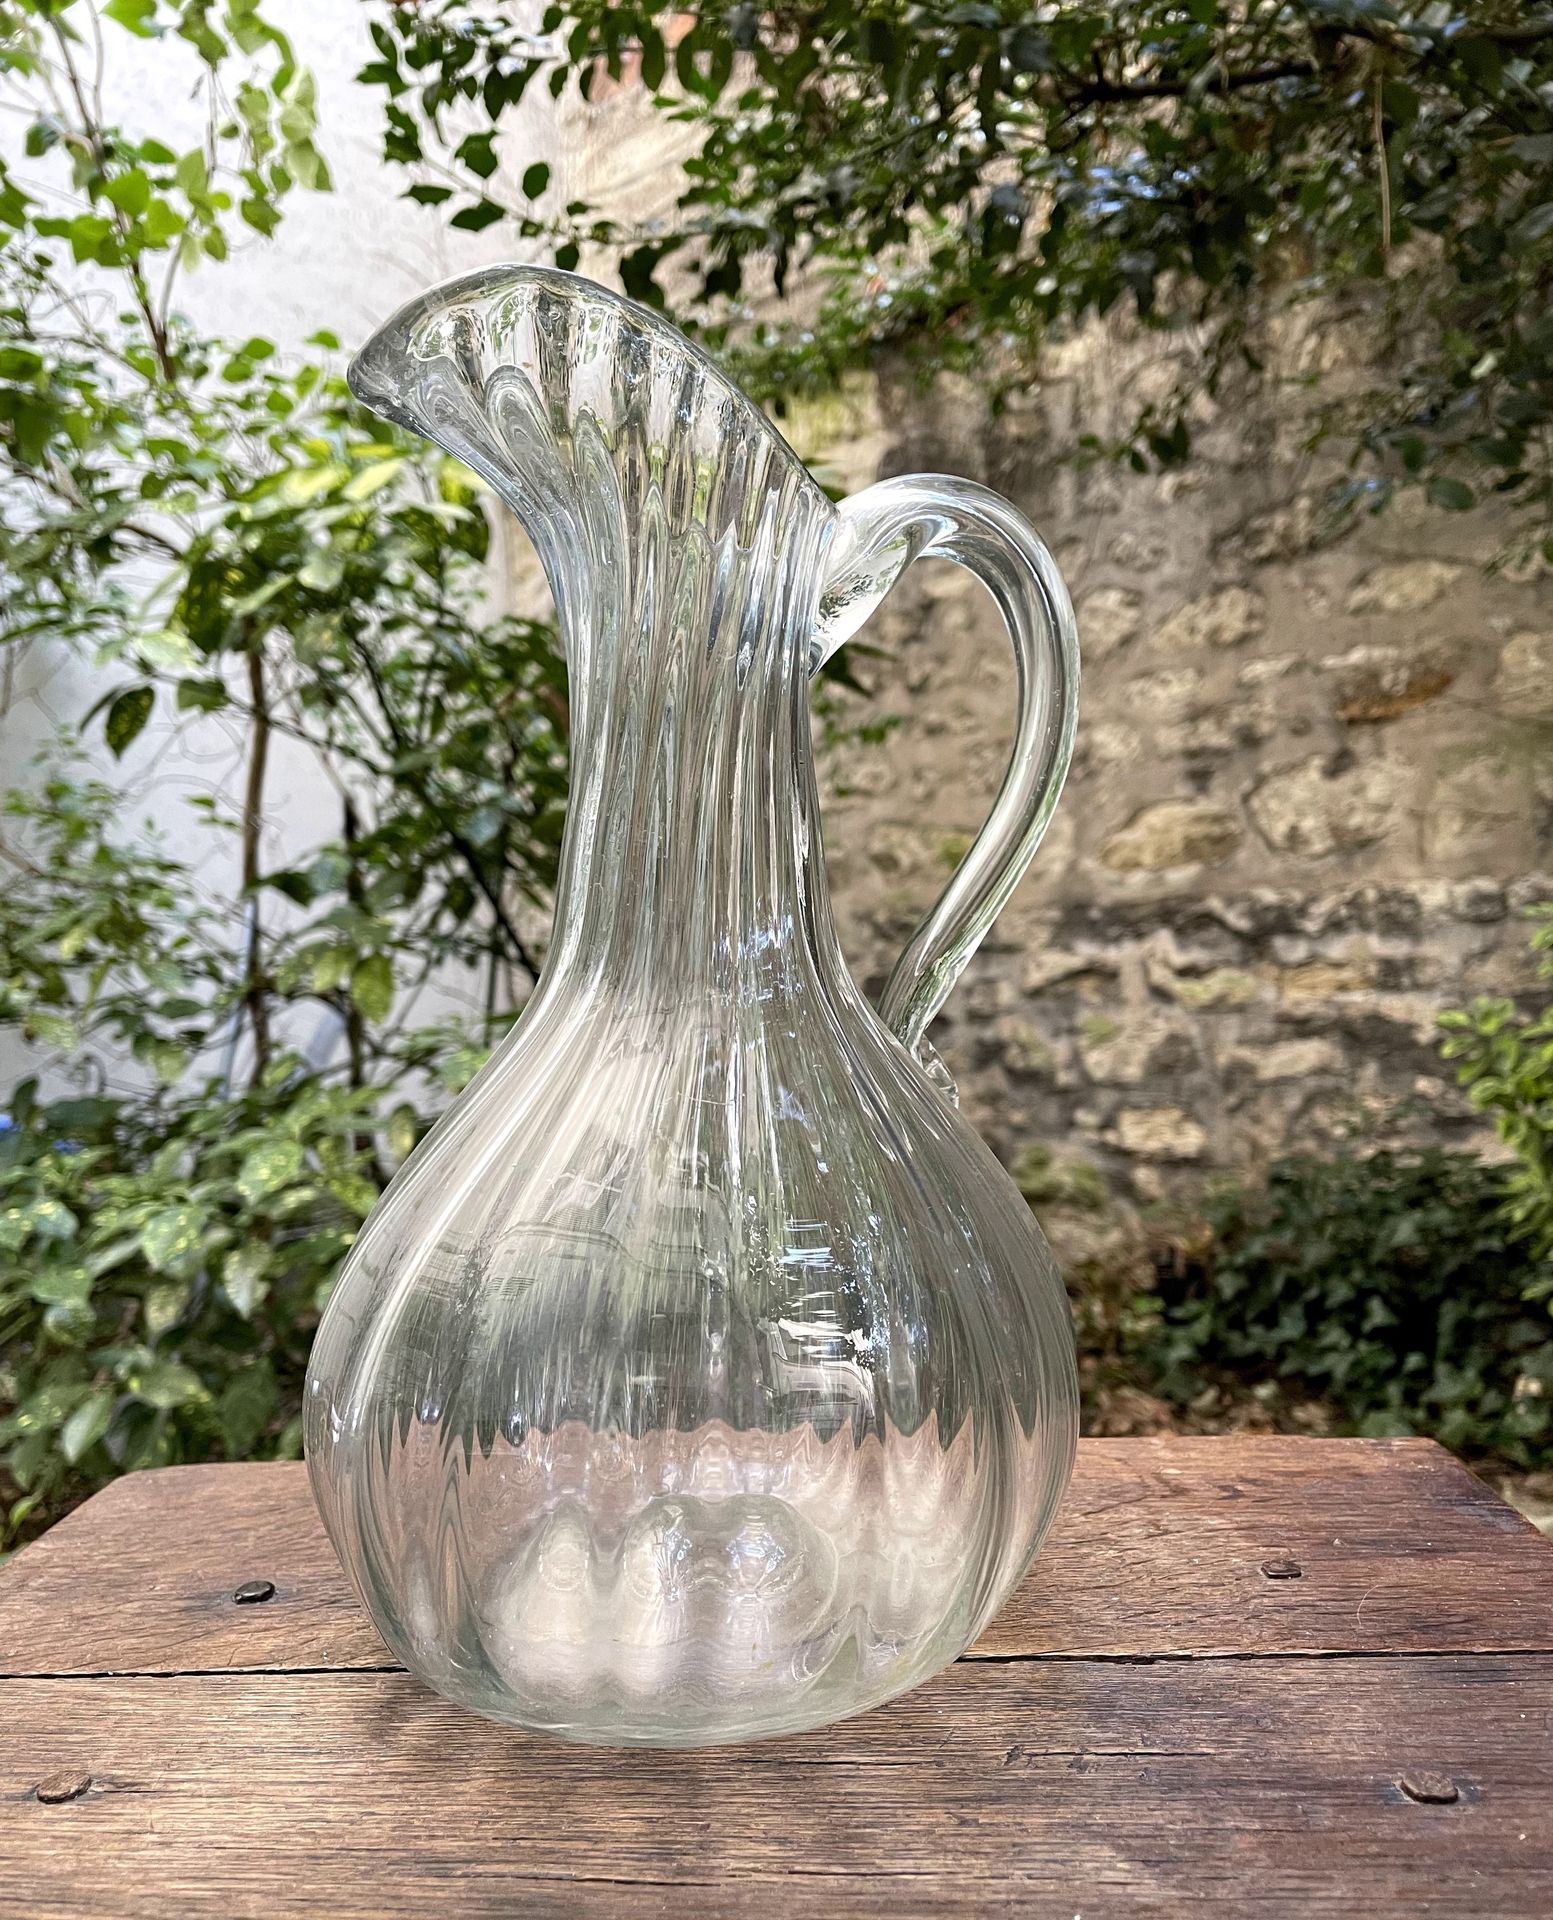 Null 吹制的玻璃苹果酒壶。

诺曼底，18世纪末

H.25厘米